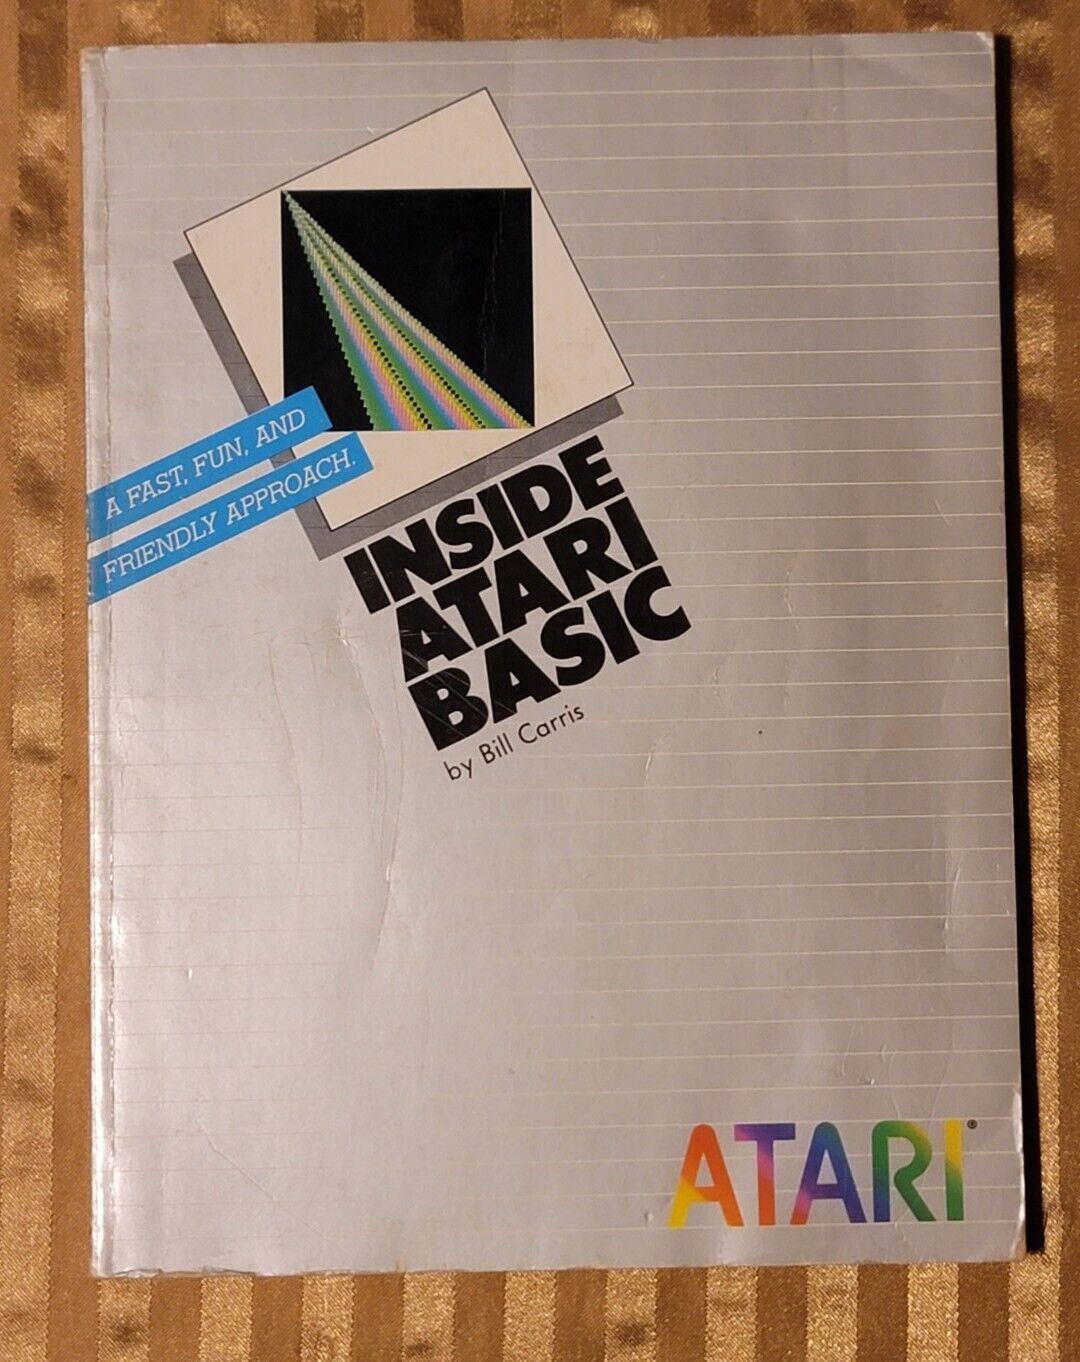 VINTAGE 1983 ATARI INSIDE ATARI BASIC BY BILL CARRIS A FAST, FUN, AND FRIENDLY